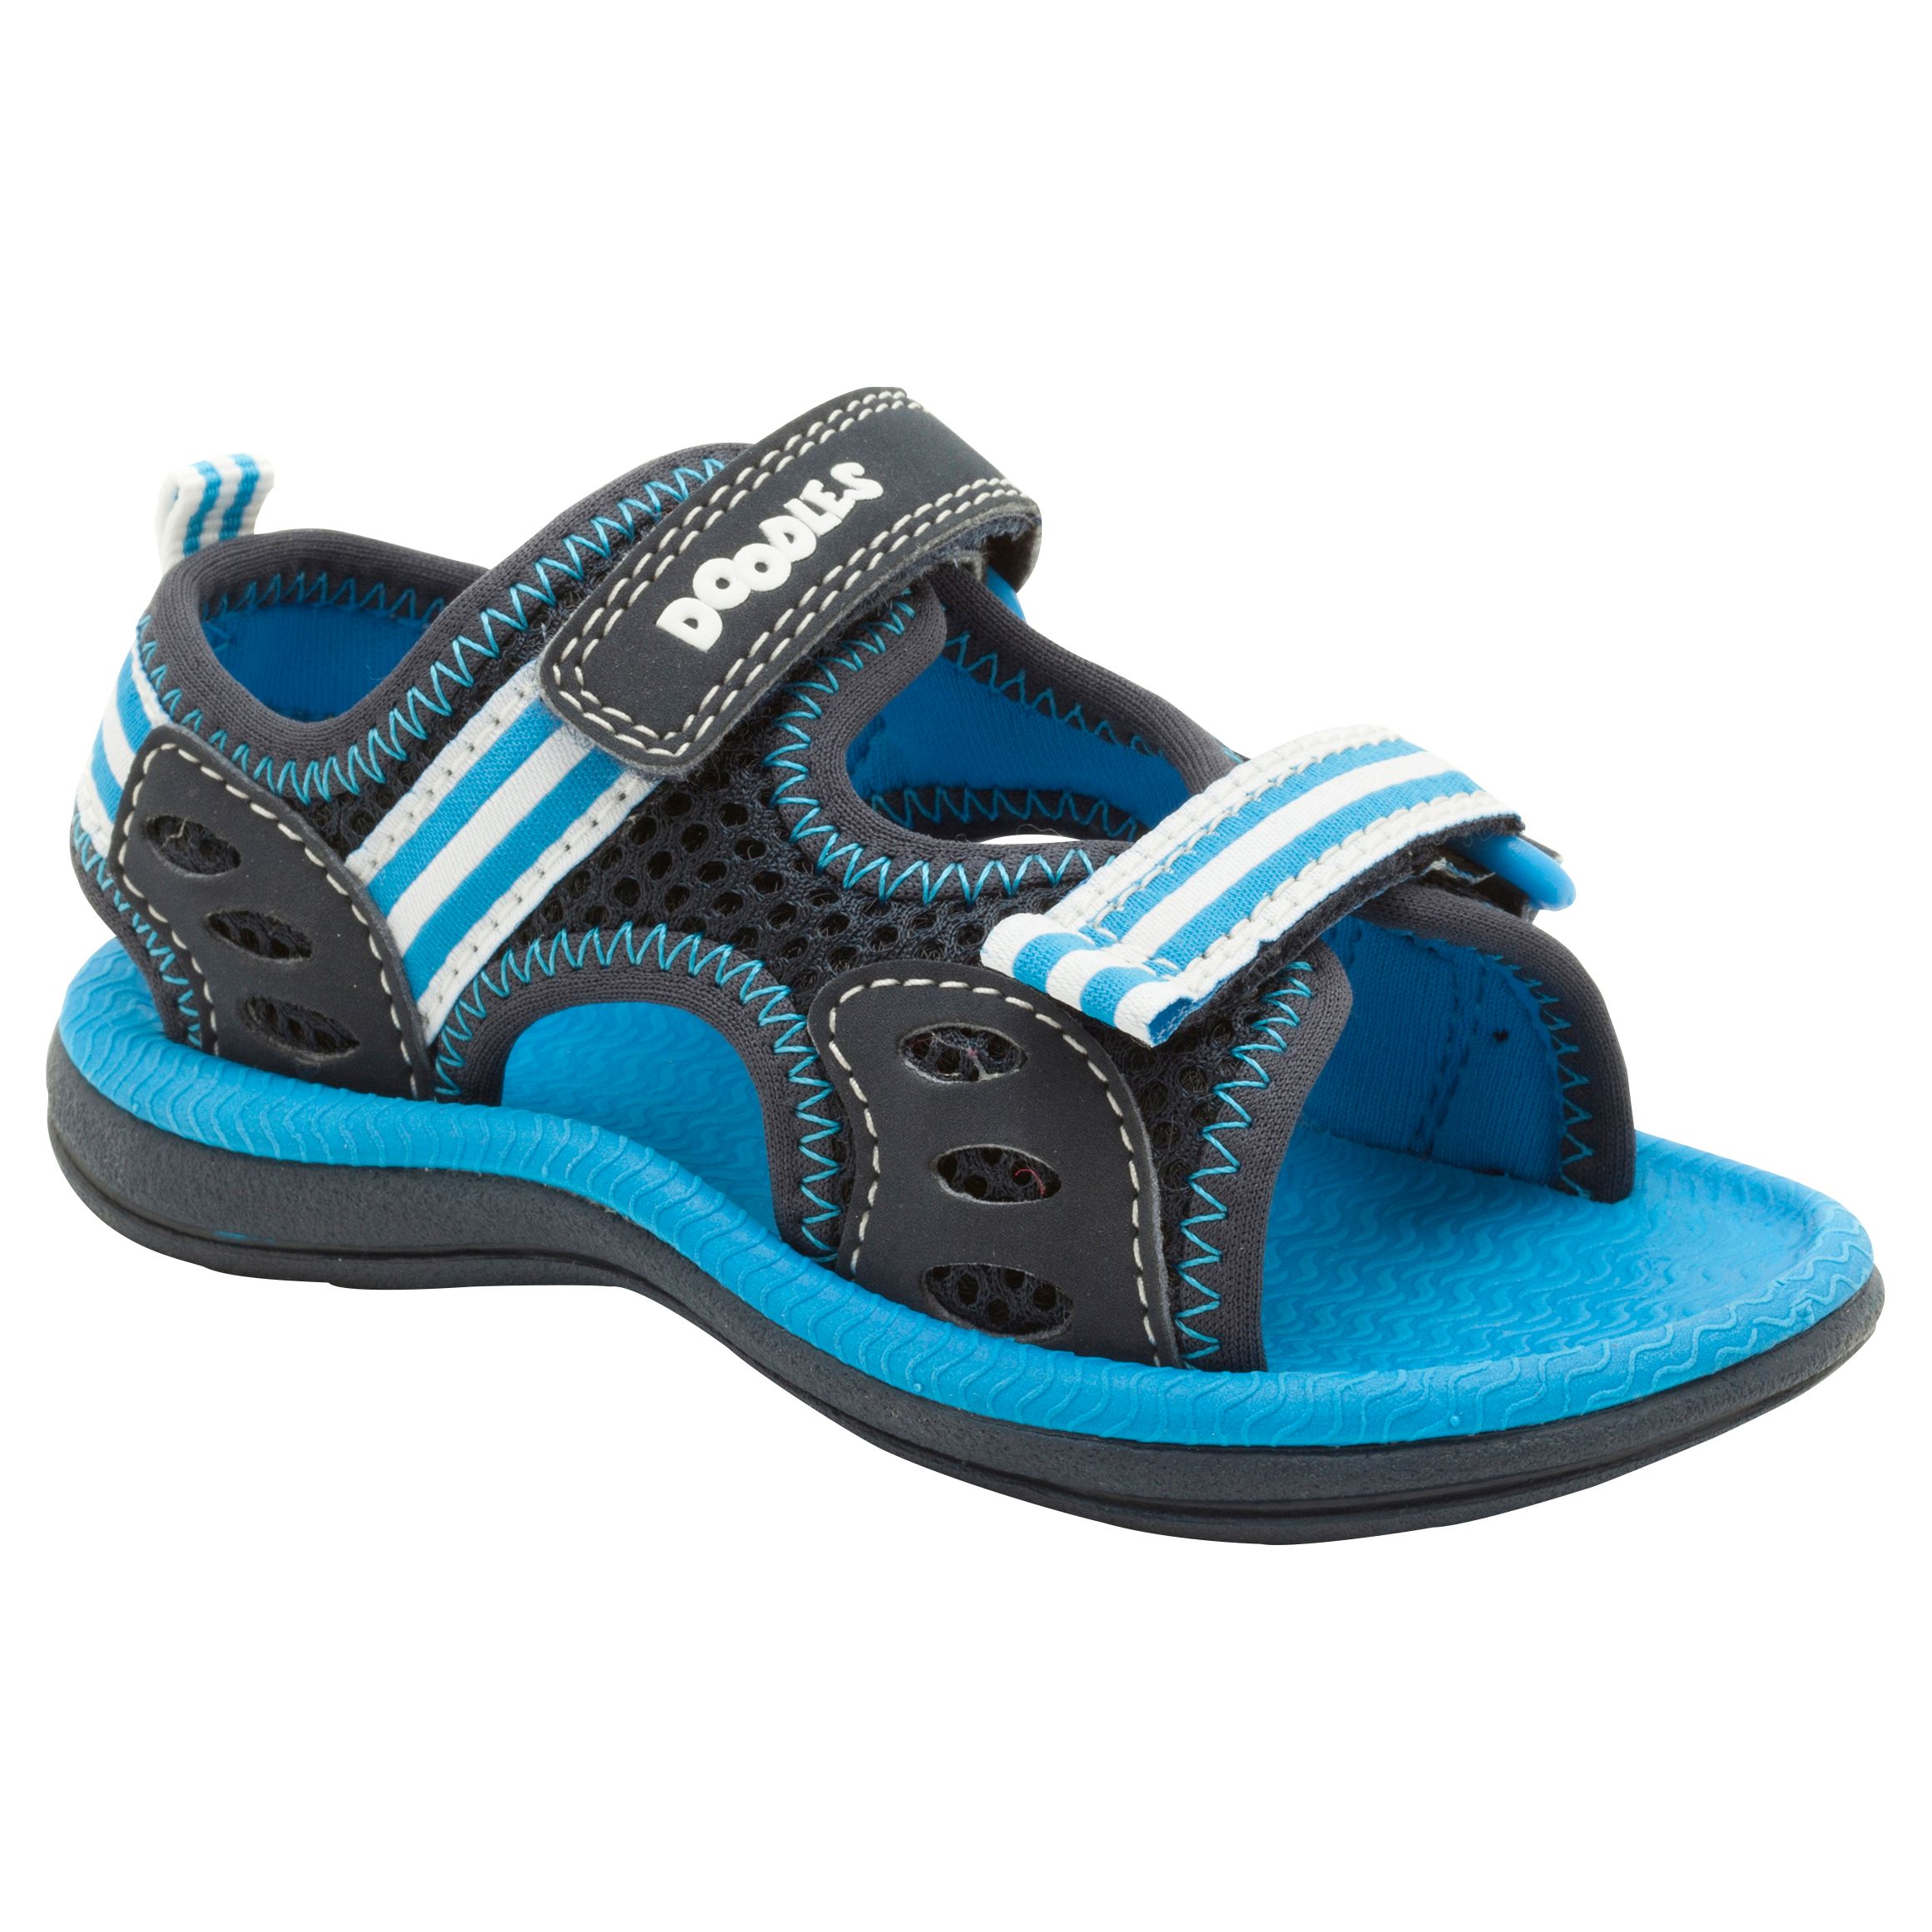 Clarks Piranha Sandals, Black/Blue